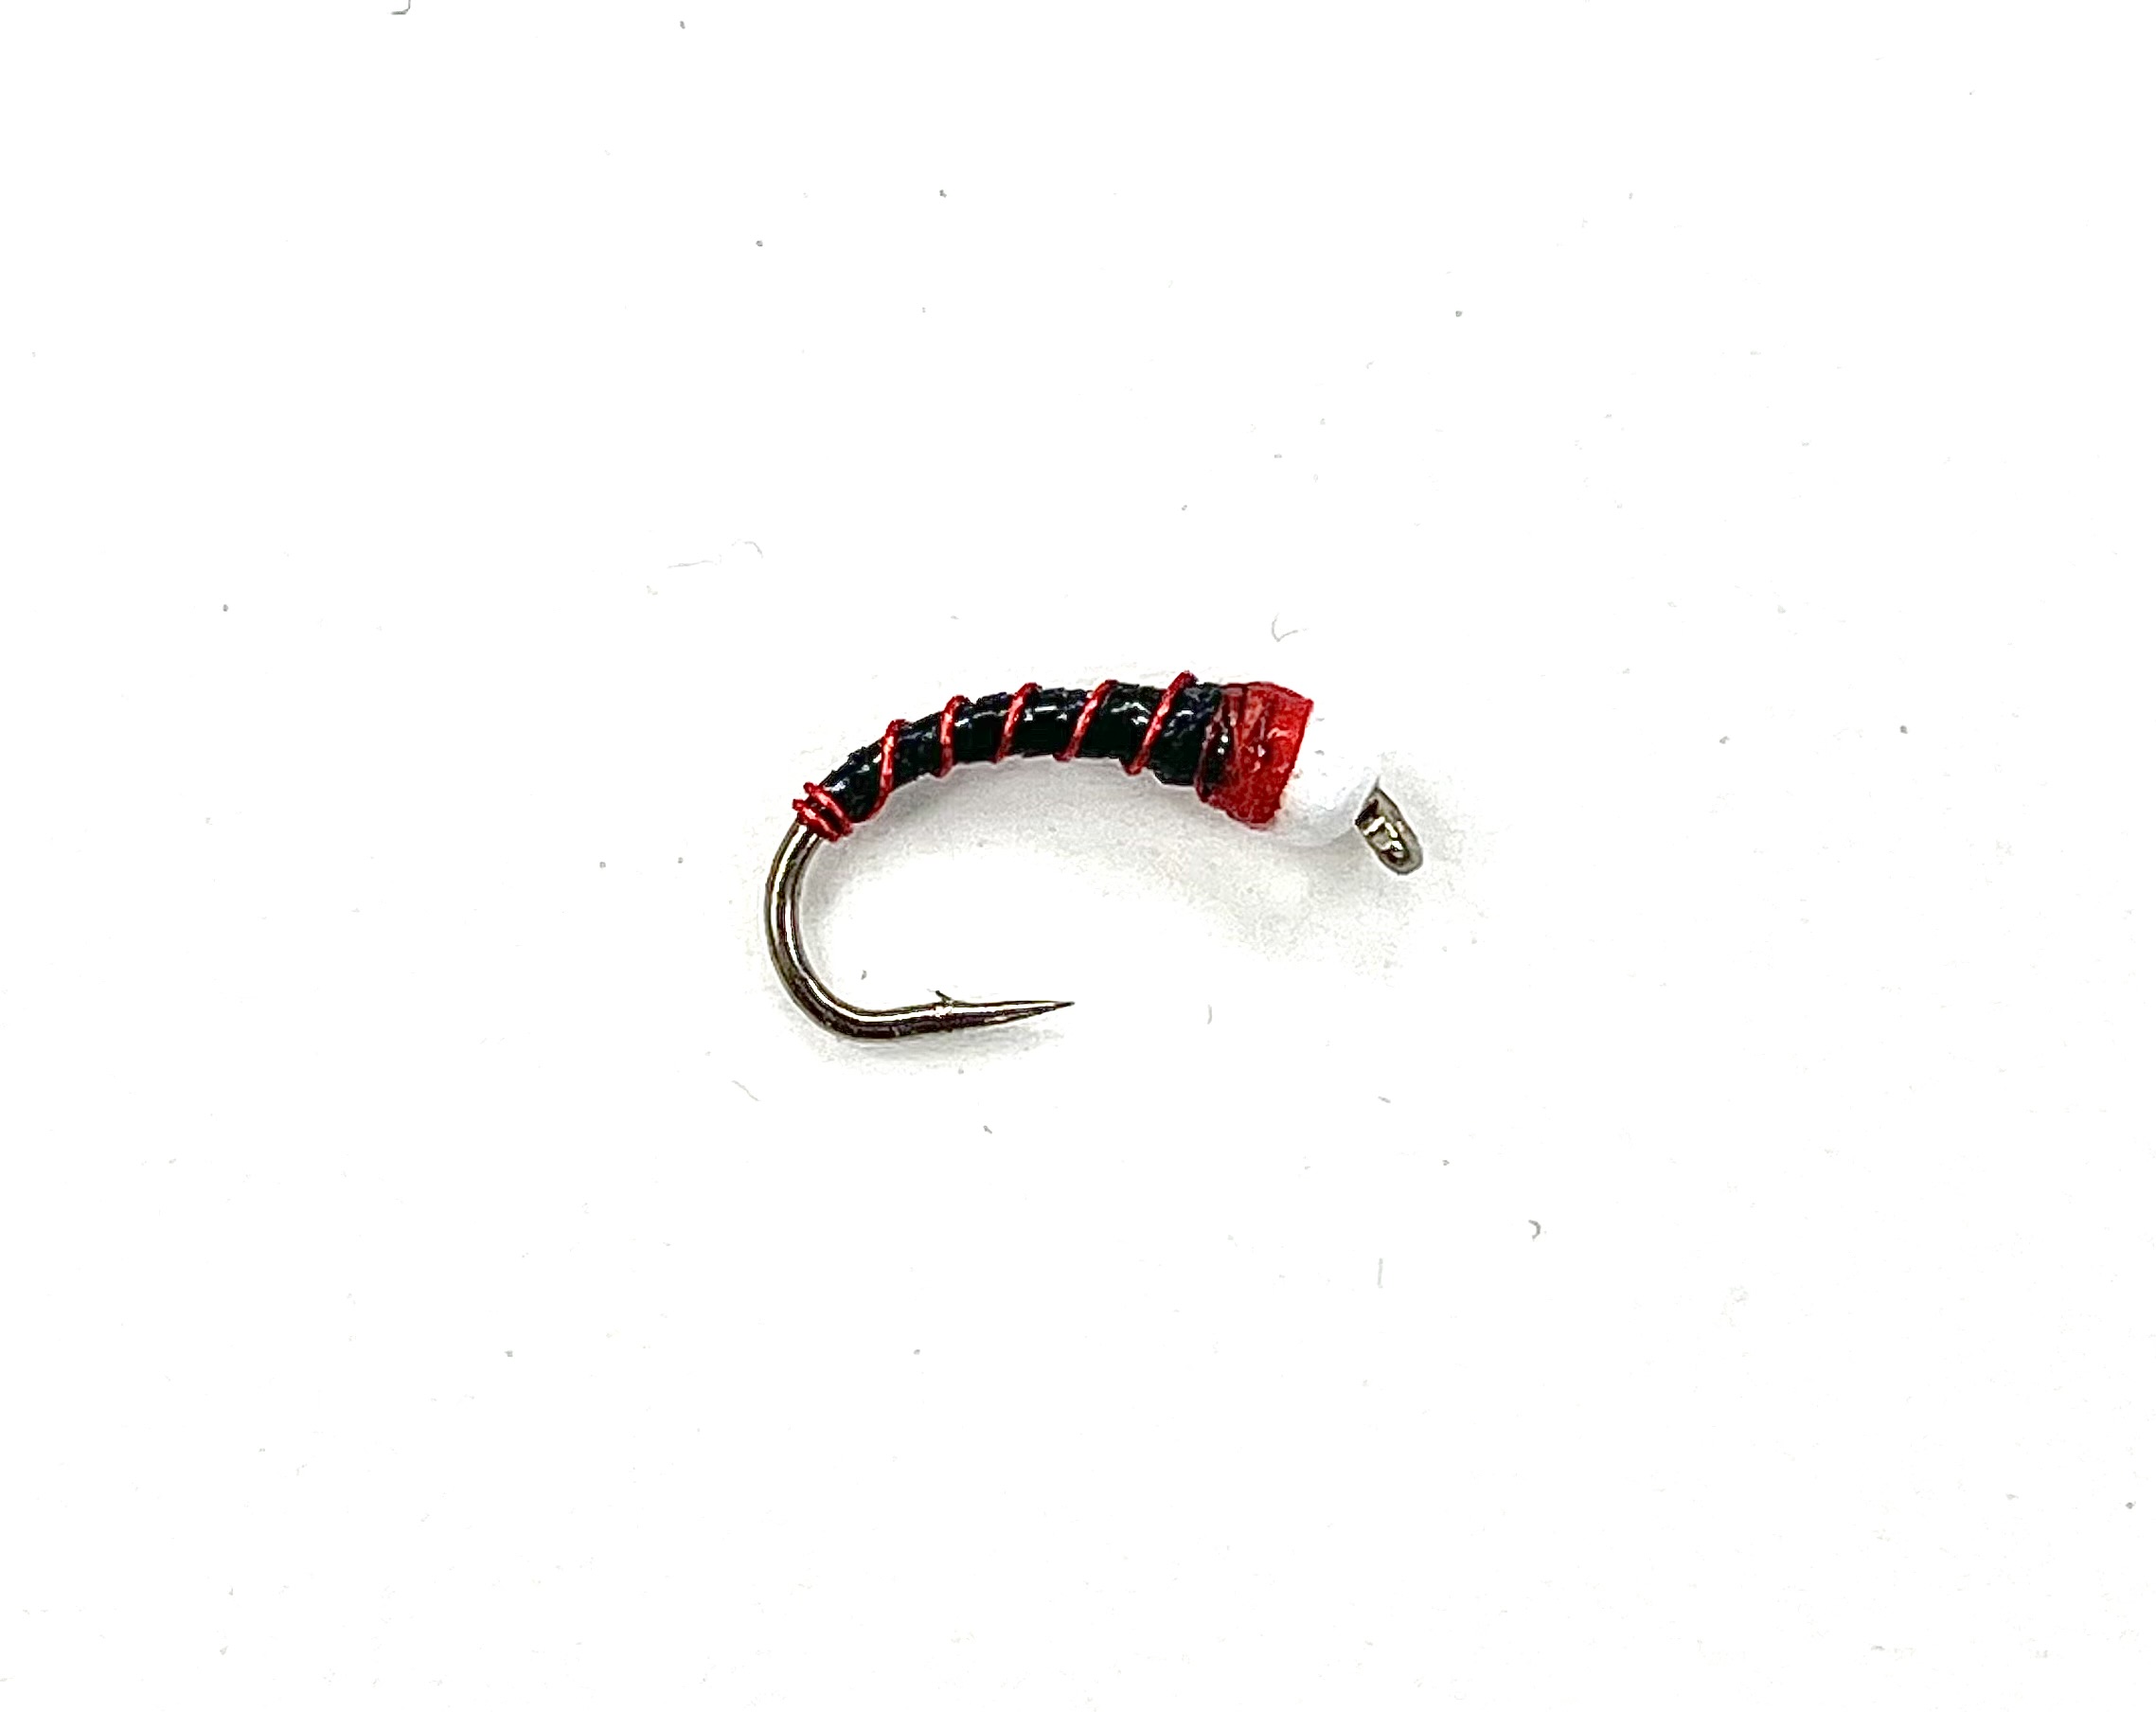 FAD BC Chironomid Pupa (White Bead) - Black/Red - Size 12